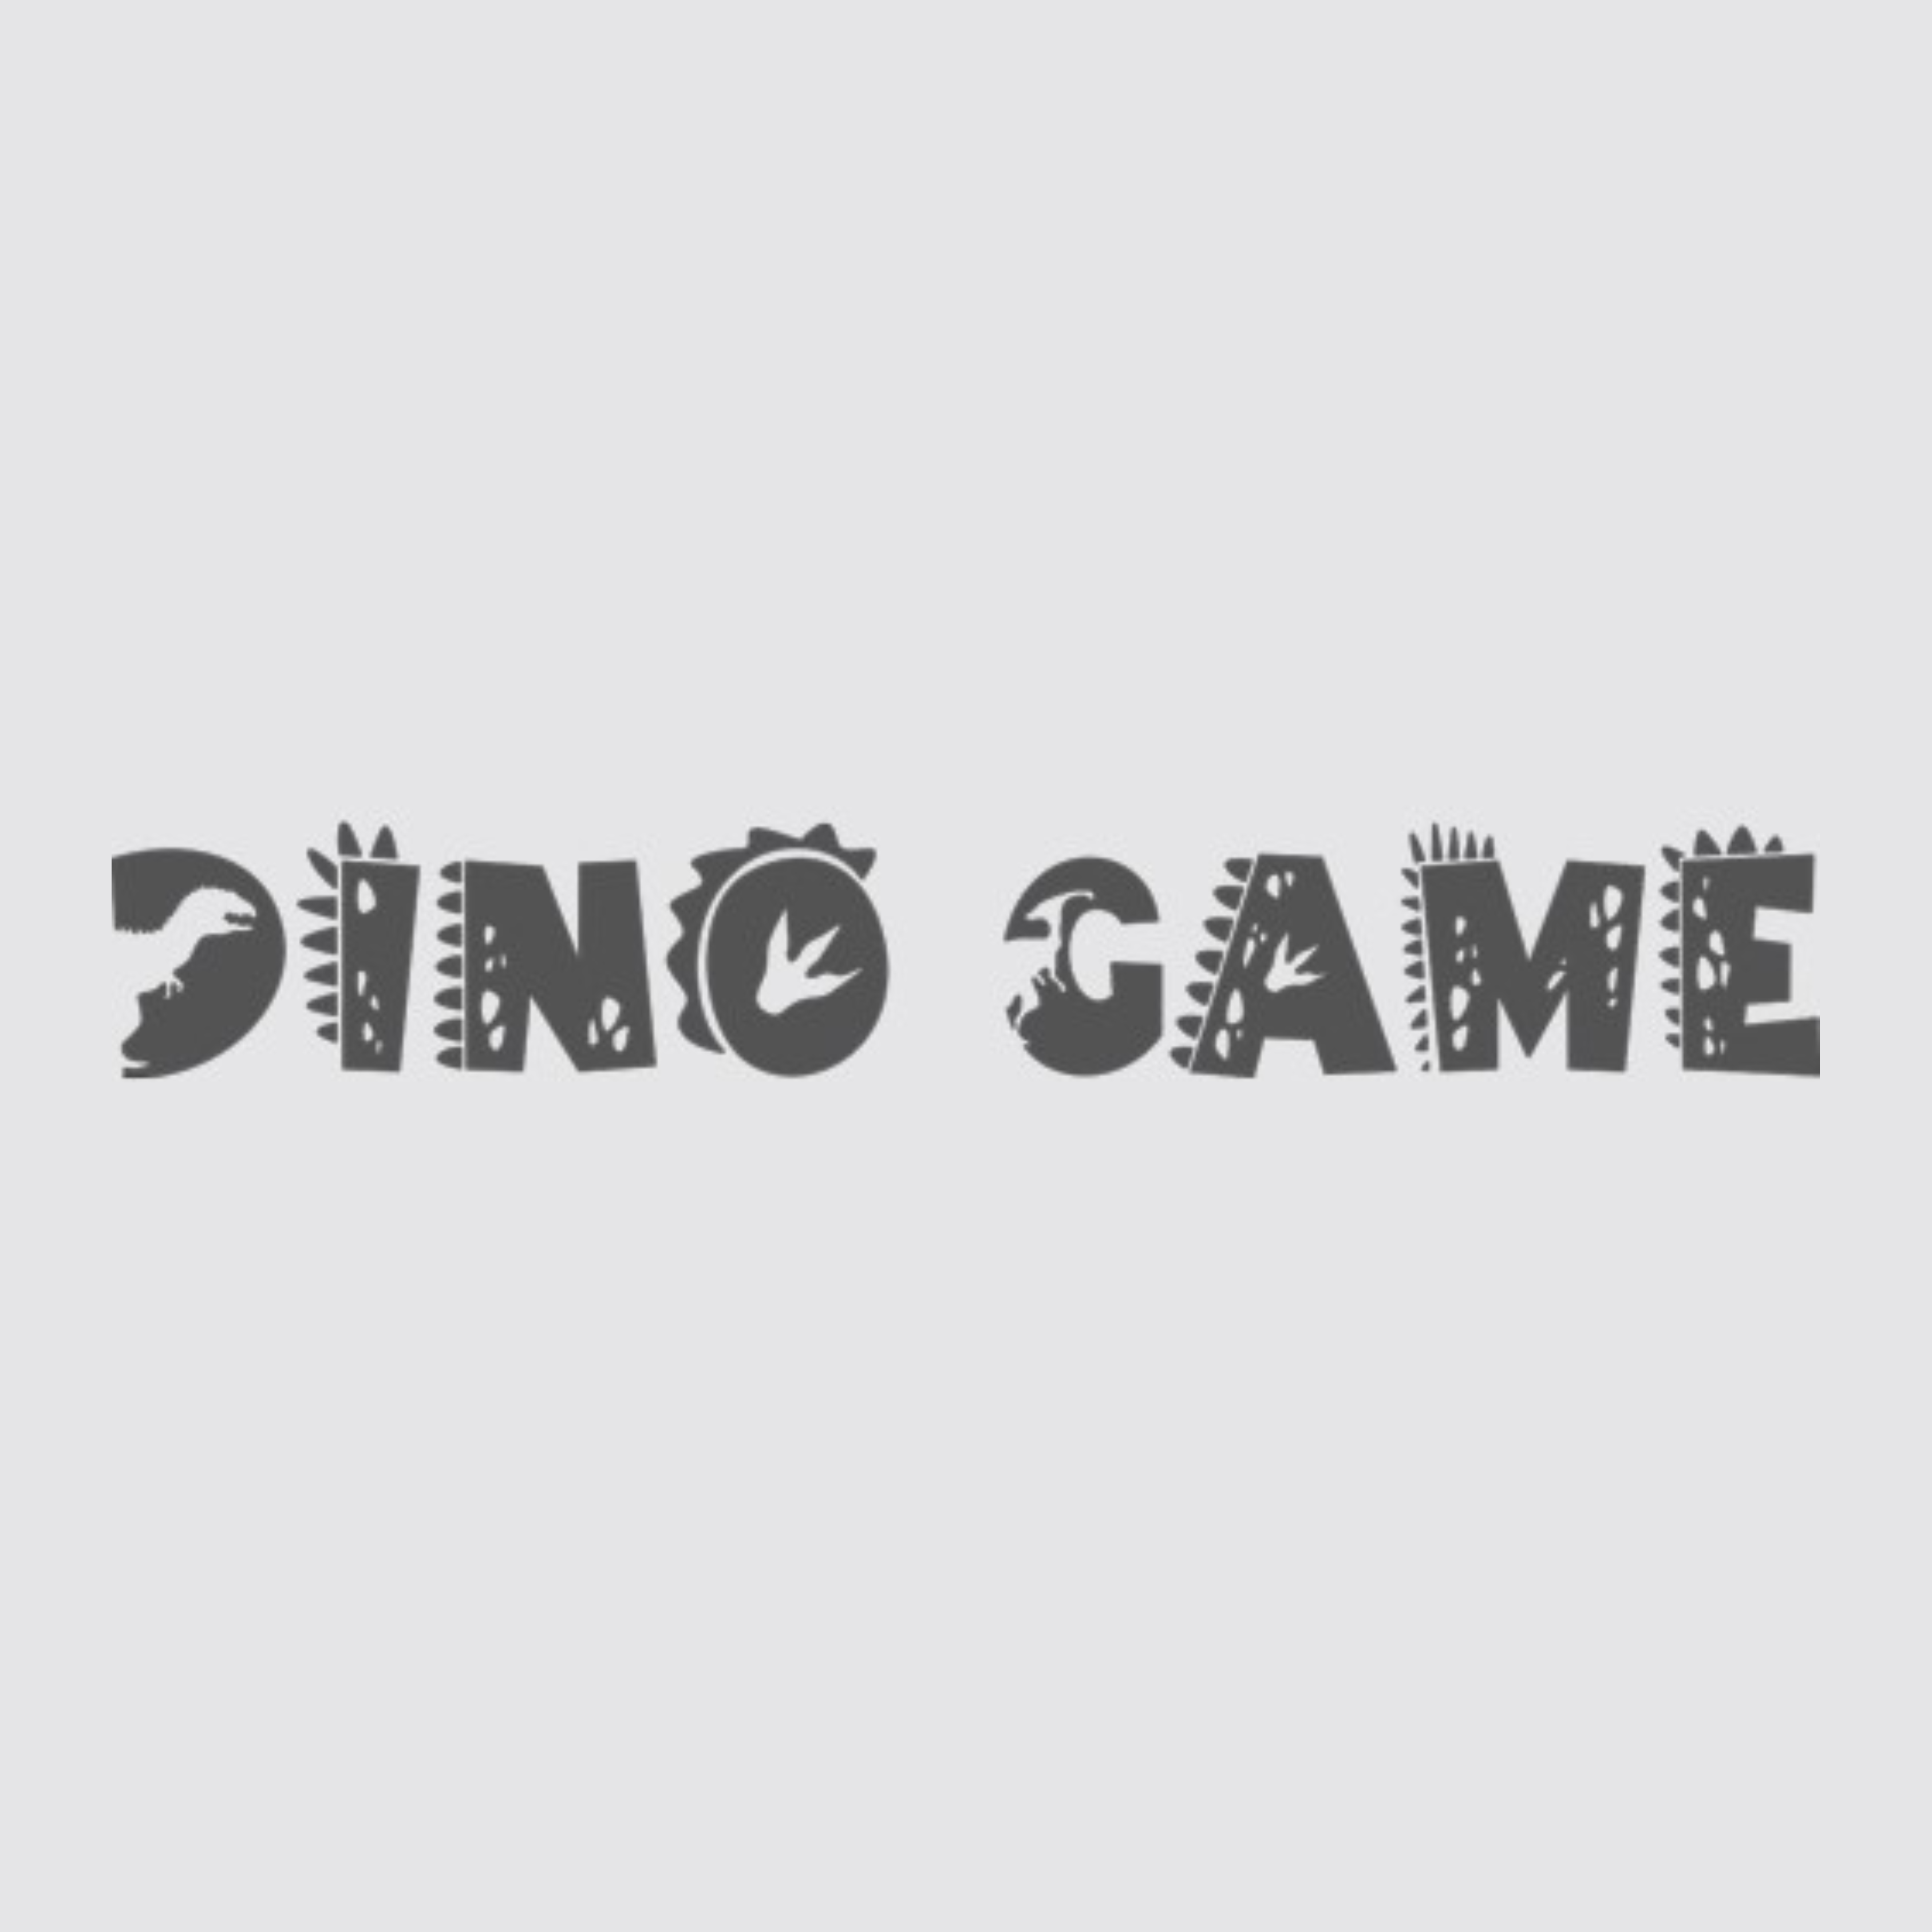 Chrome Offline Dino Game May Get a Birthday Mode